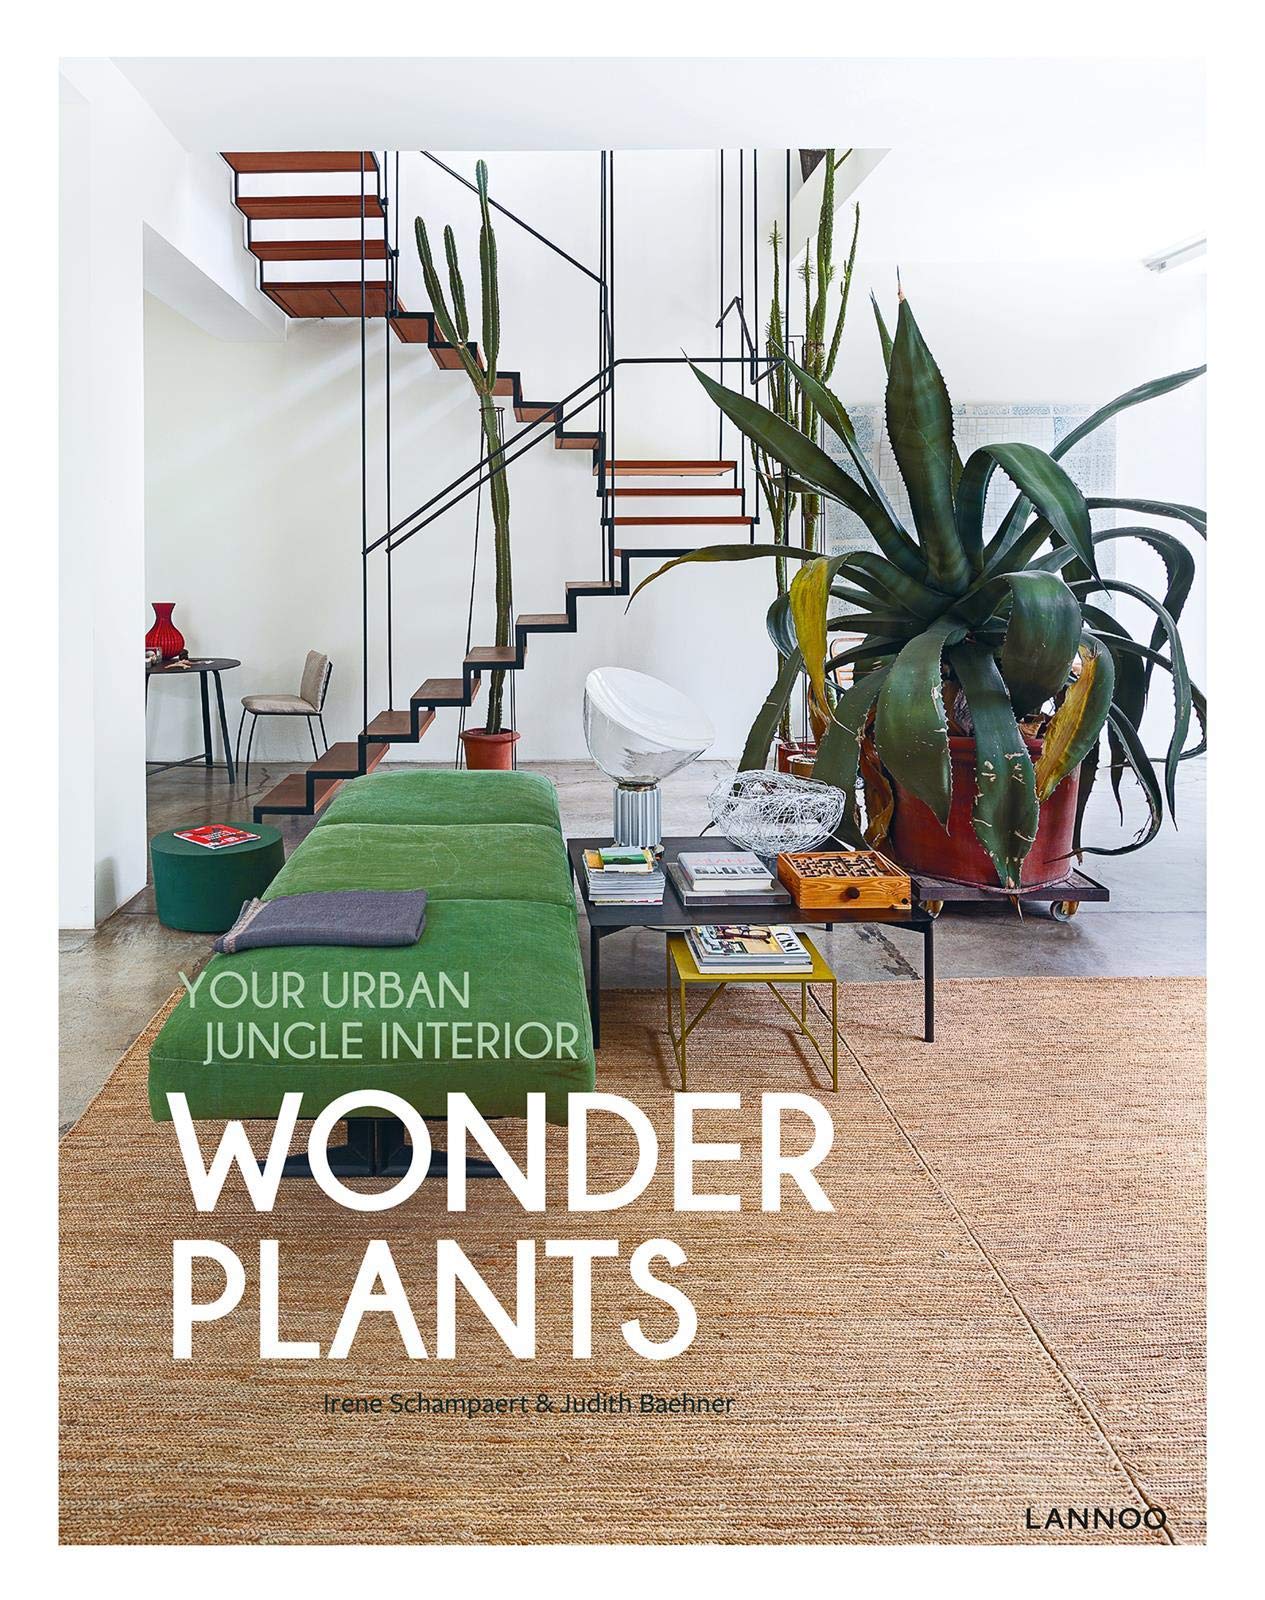 Wonder Plants